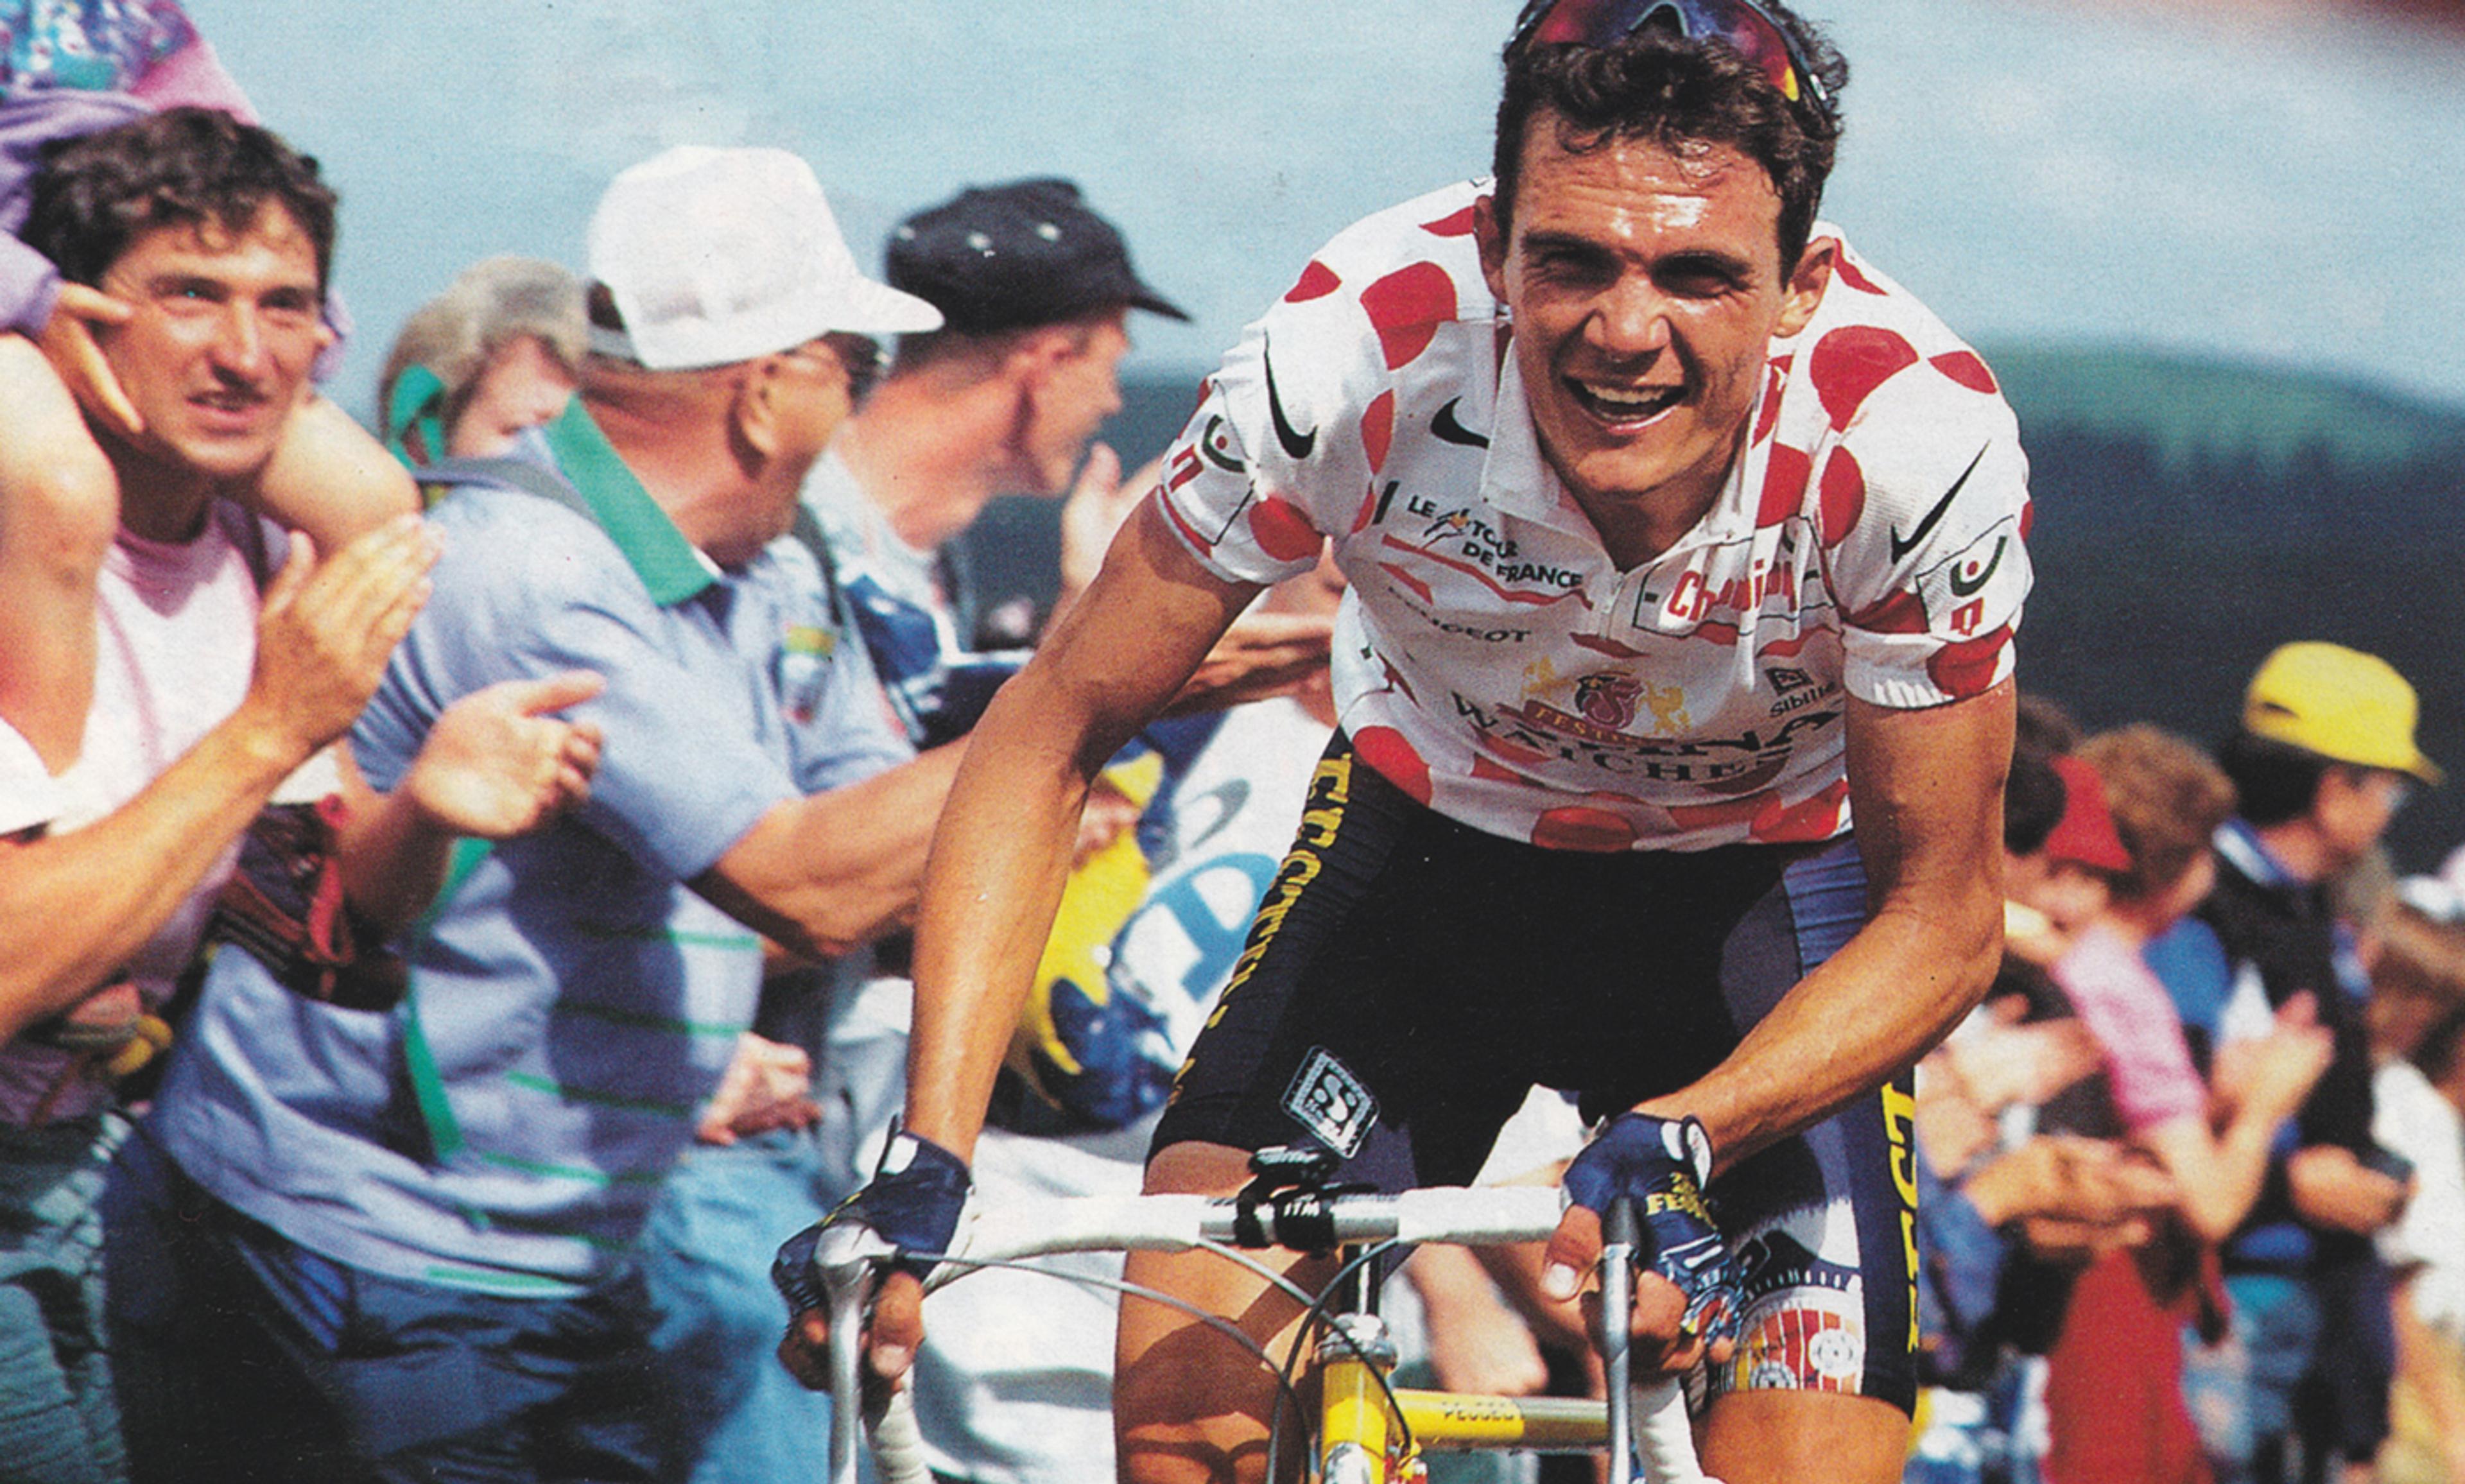 <p>Richard Virenque of the Festina team in the 1995 Tour de France. <em>Photo by Anders/Flickr</em></p>